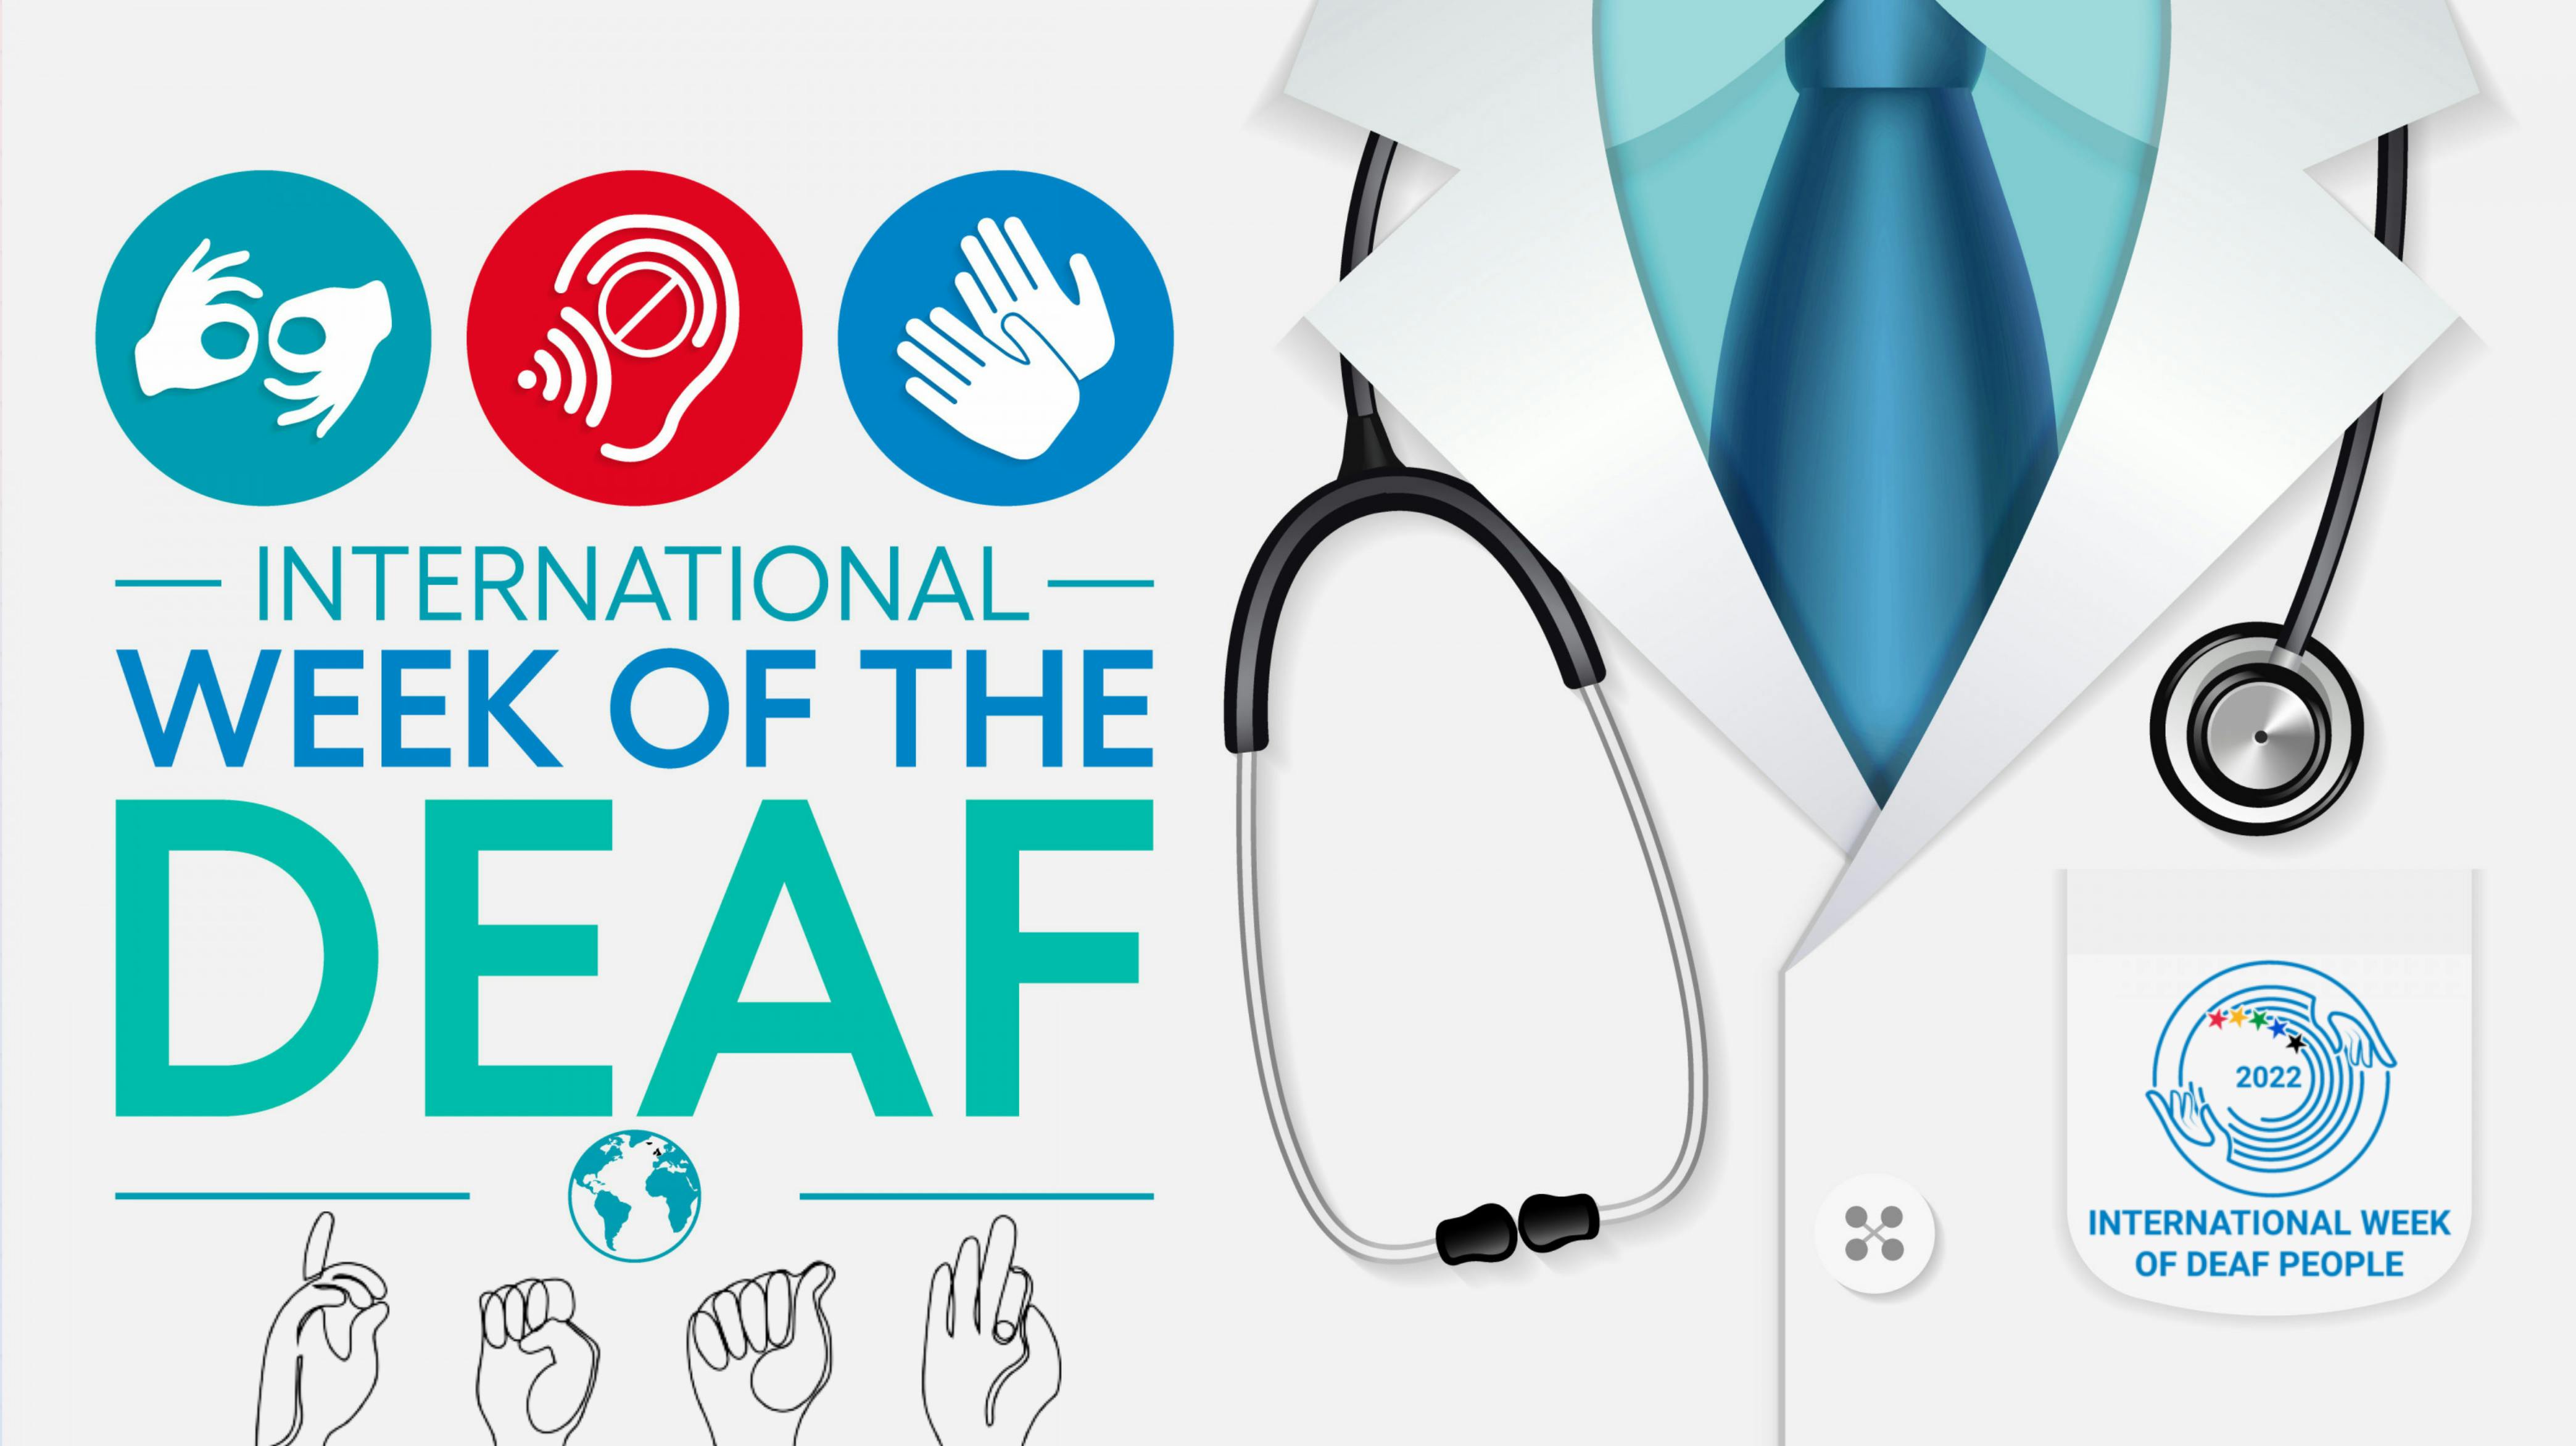 URMC Celebrates the International Week of the Deaf